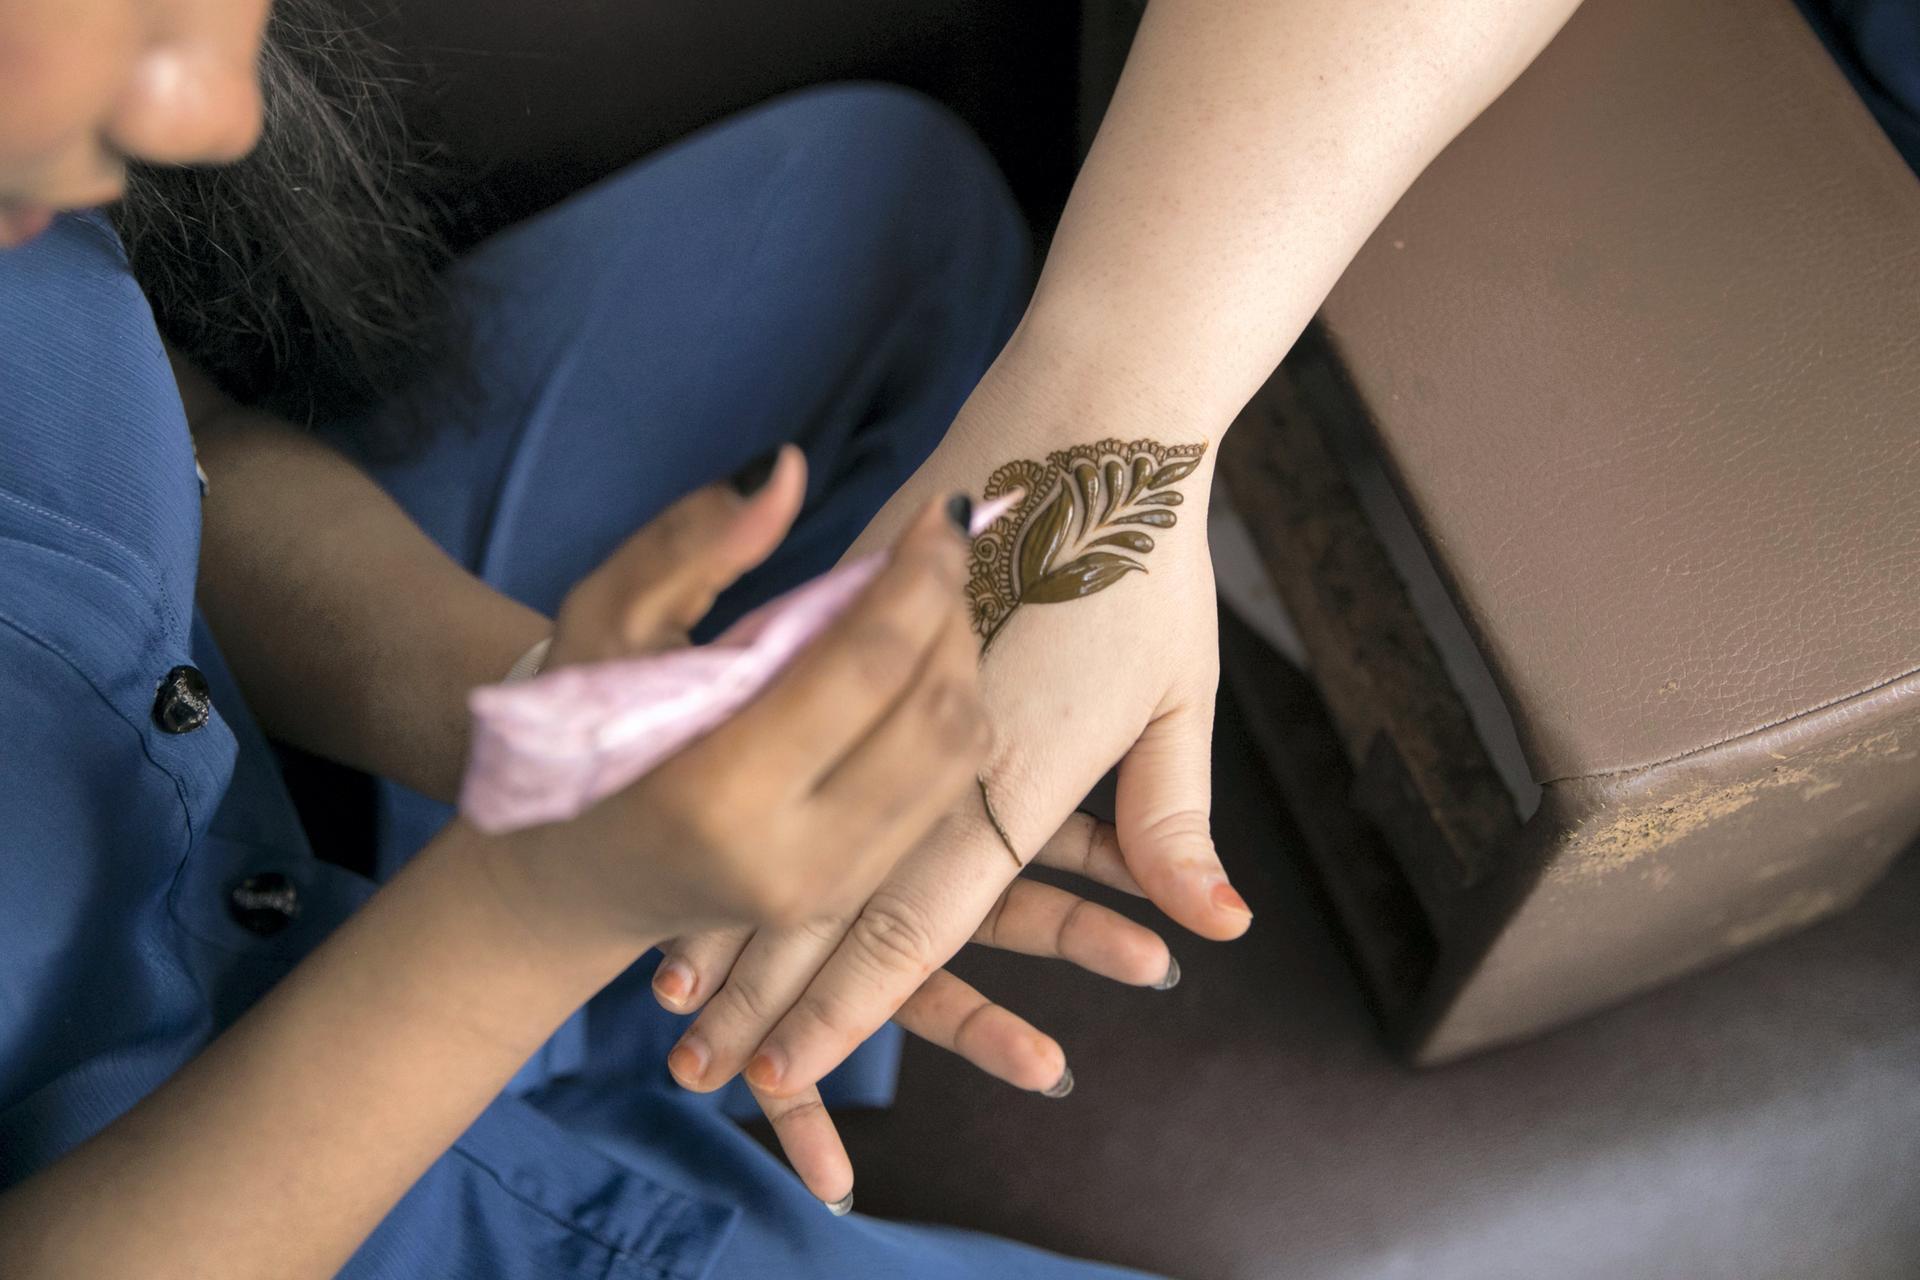 4 henna artists share ideas and application advice ahead of Eid